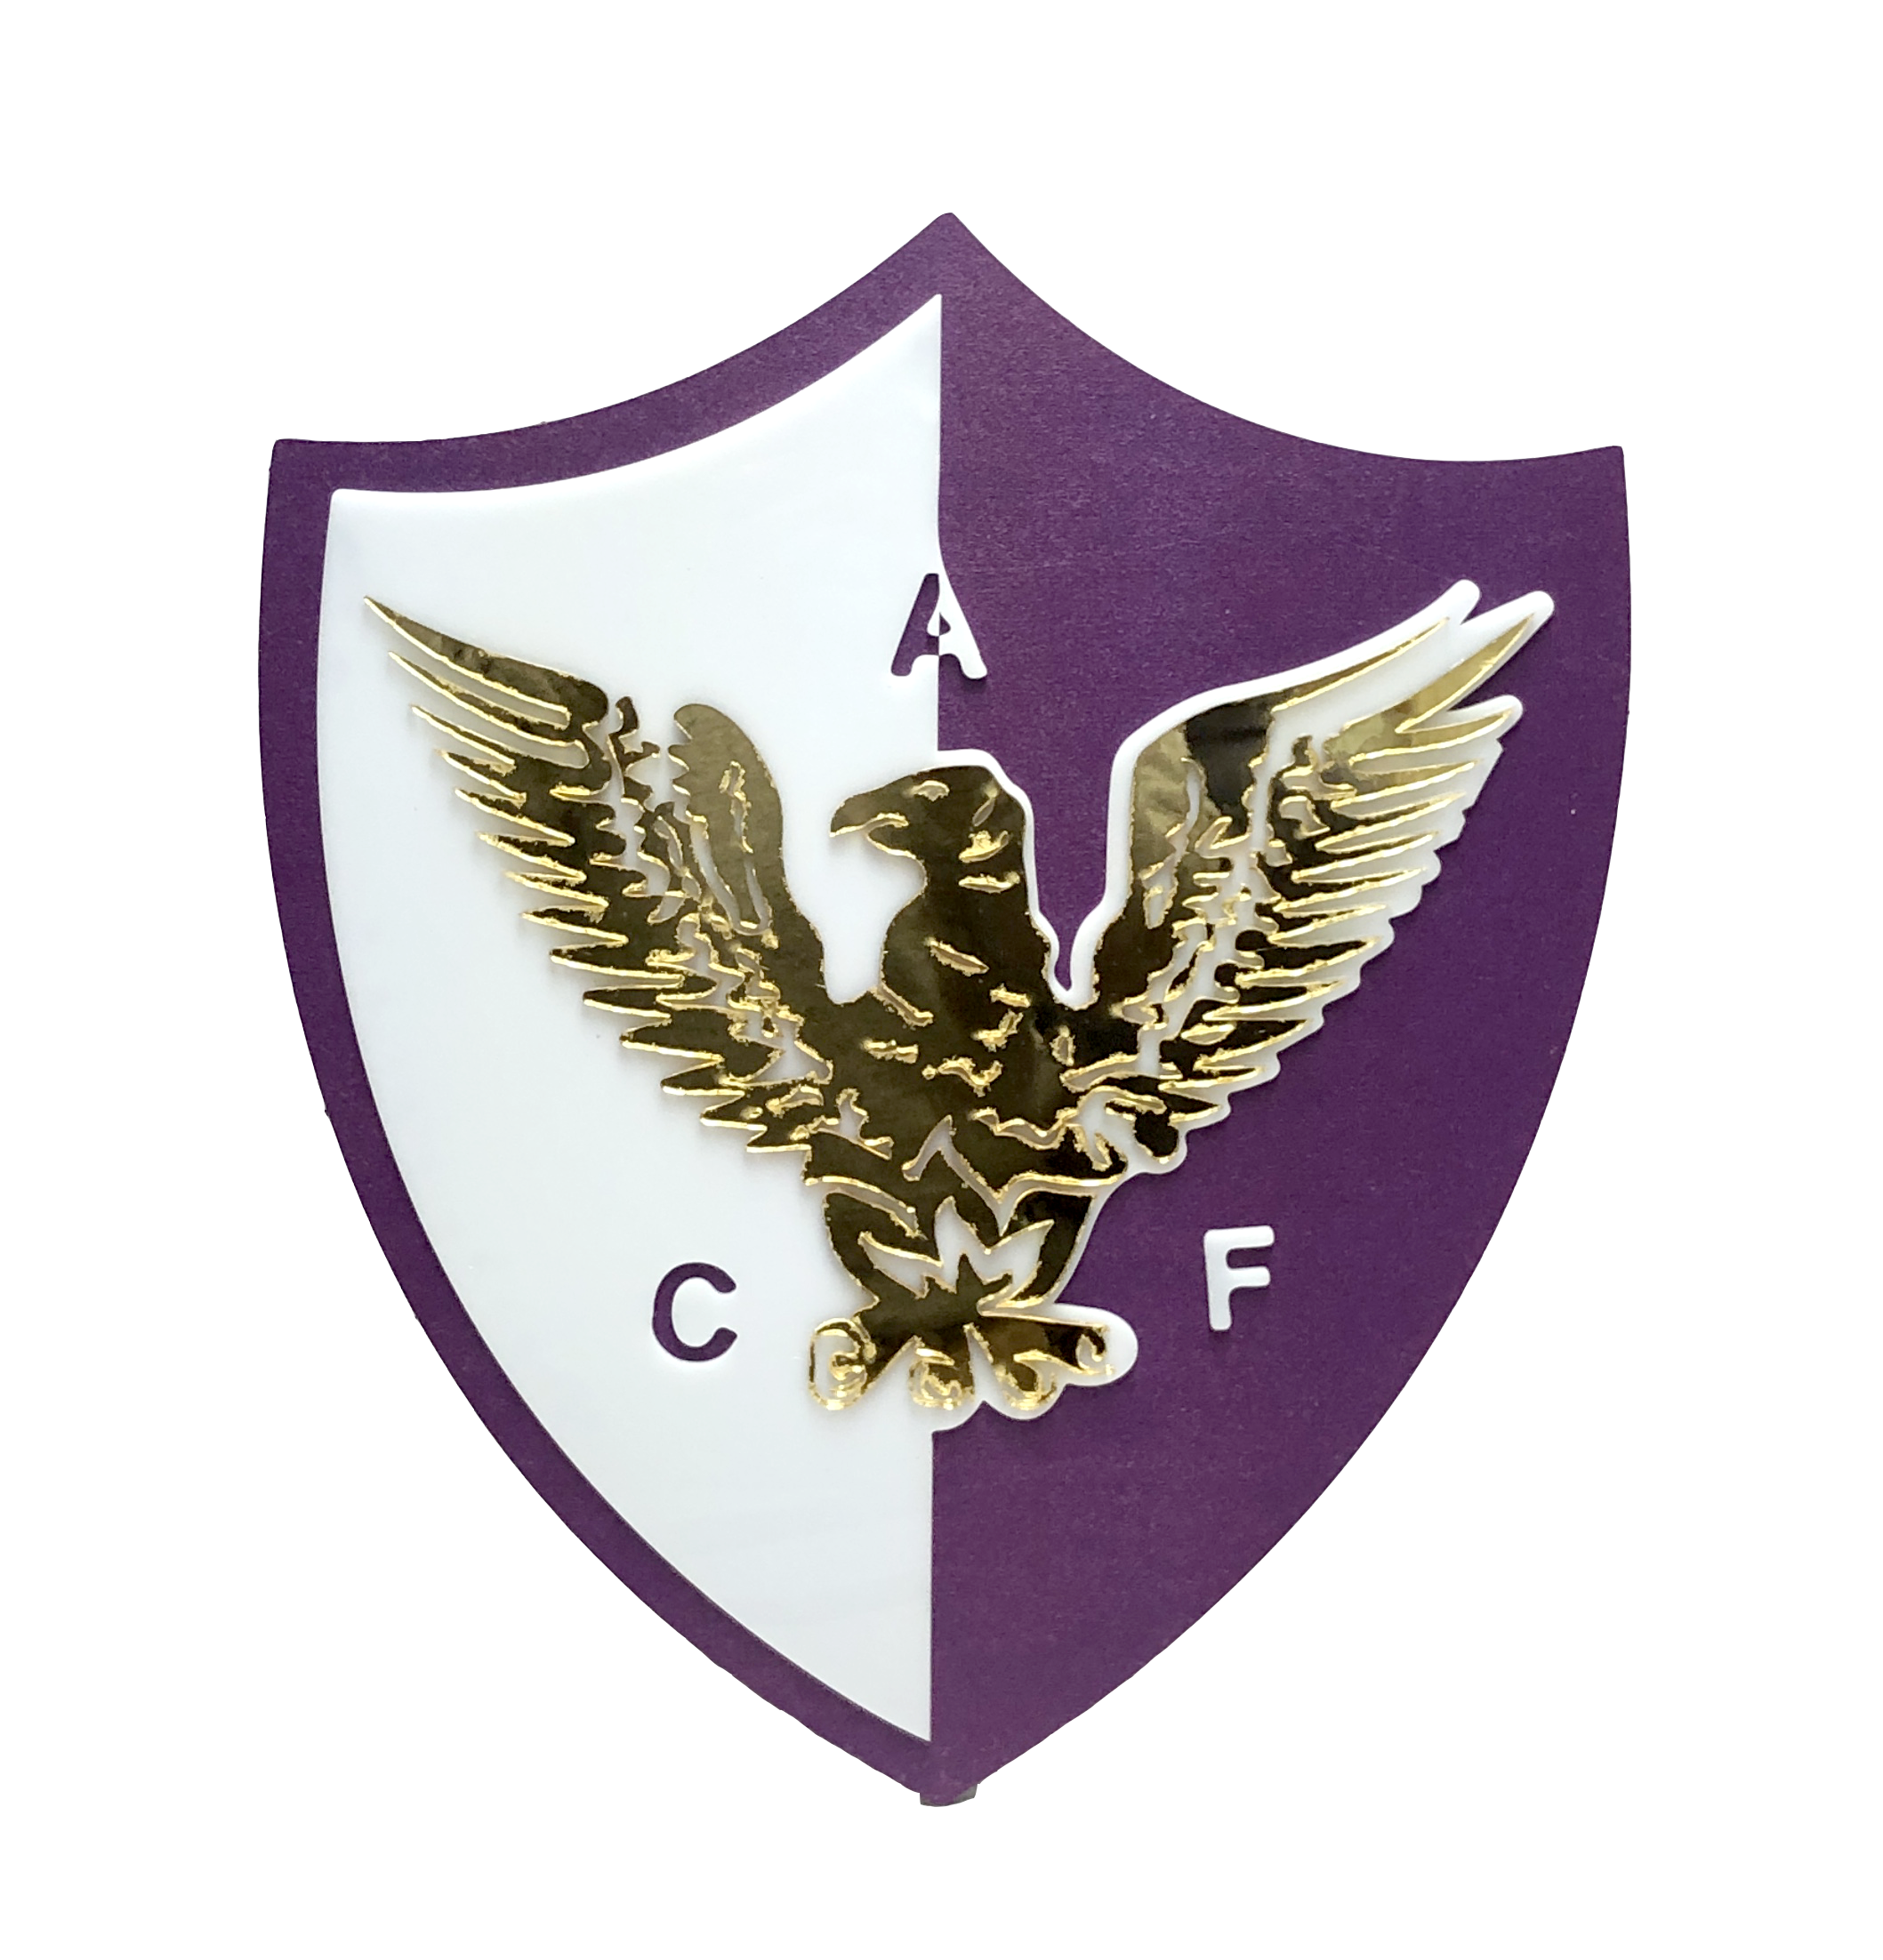 Centro Atlético Fénix - Wikipedia